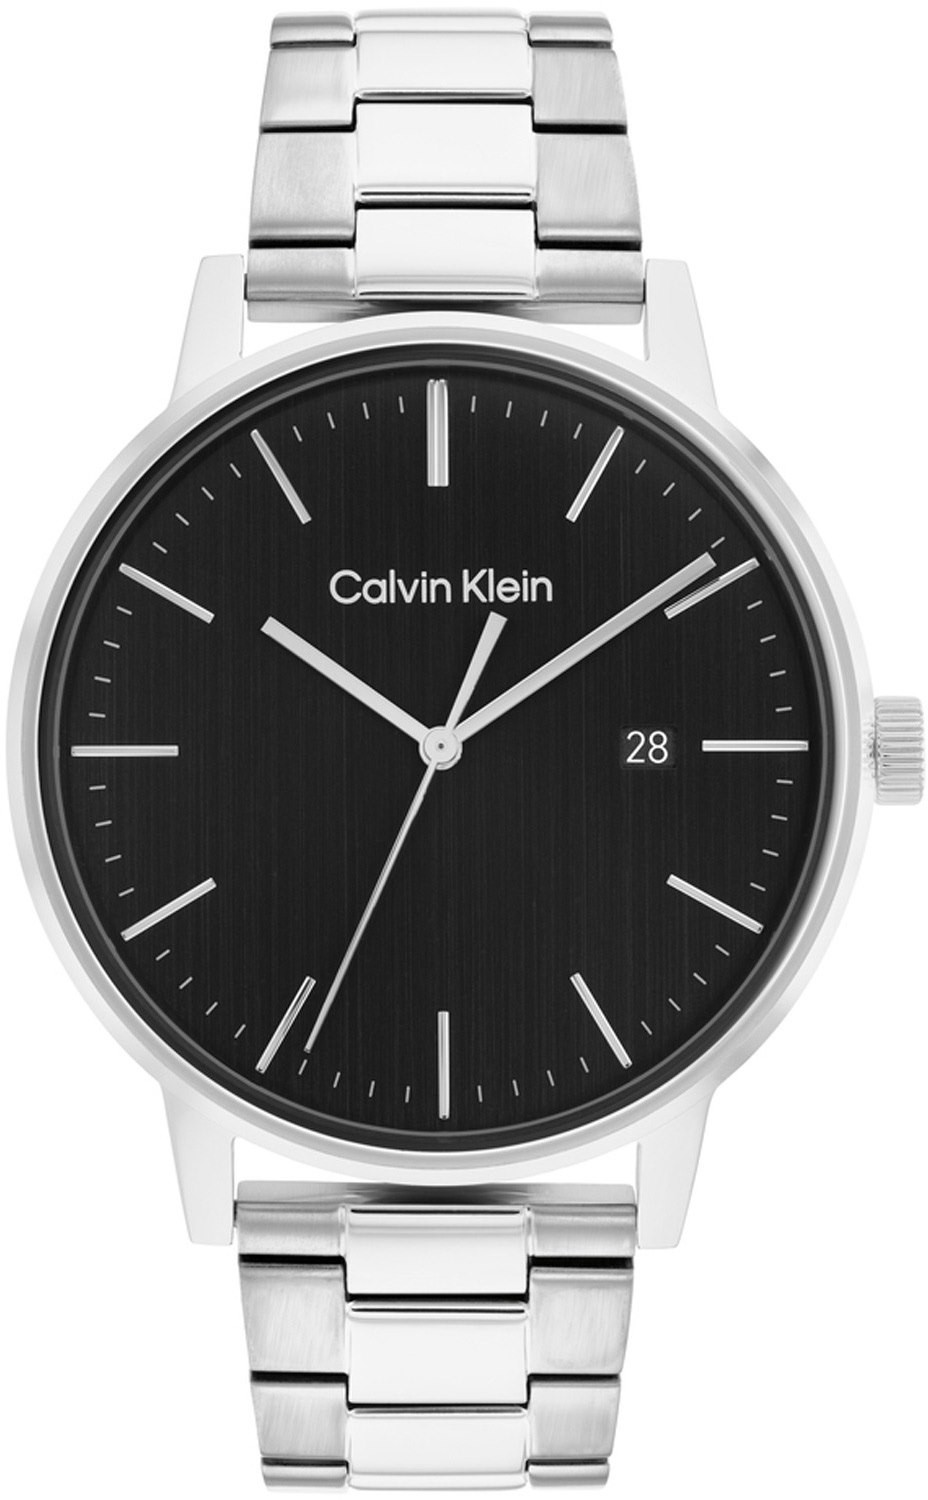 Calvin Klein Linked Date 25200053